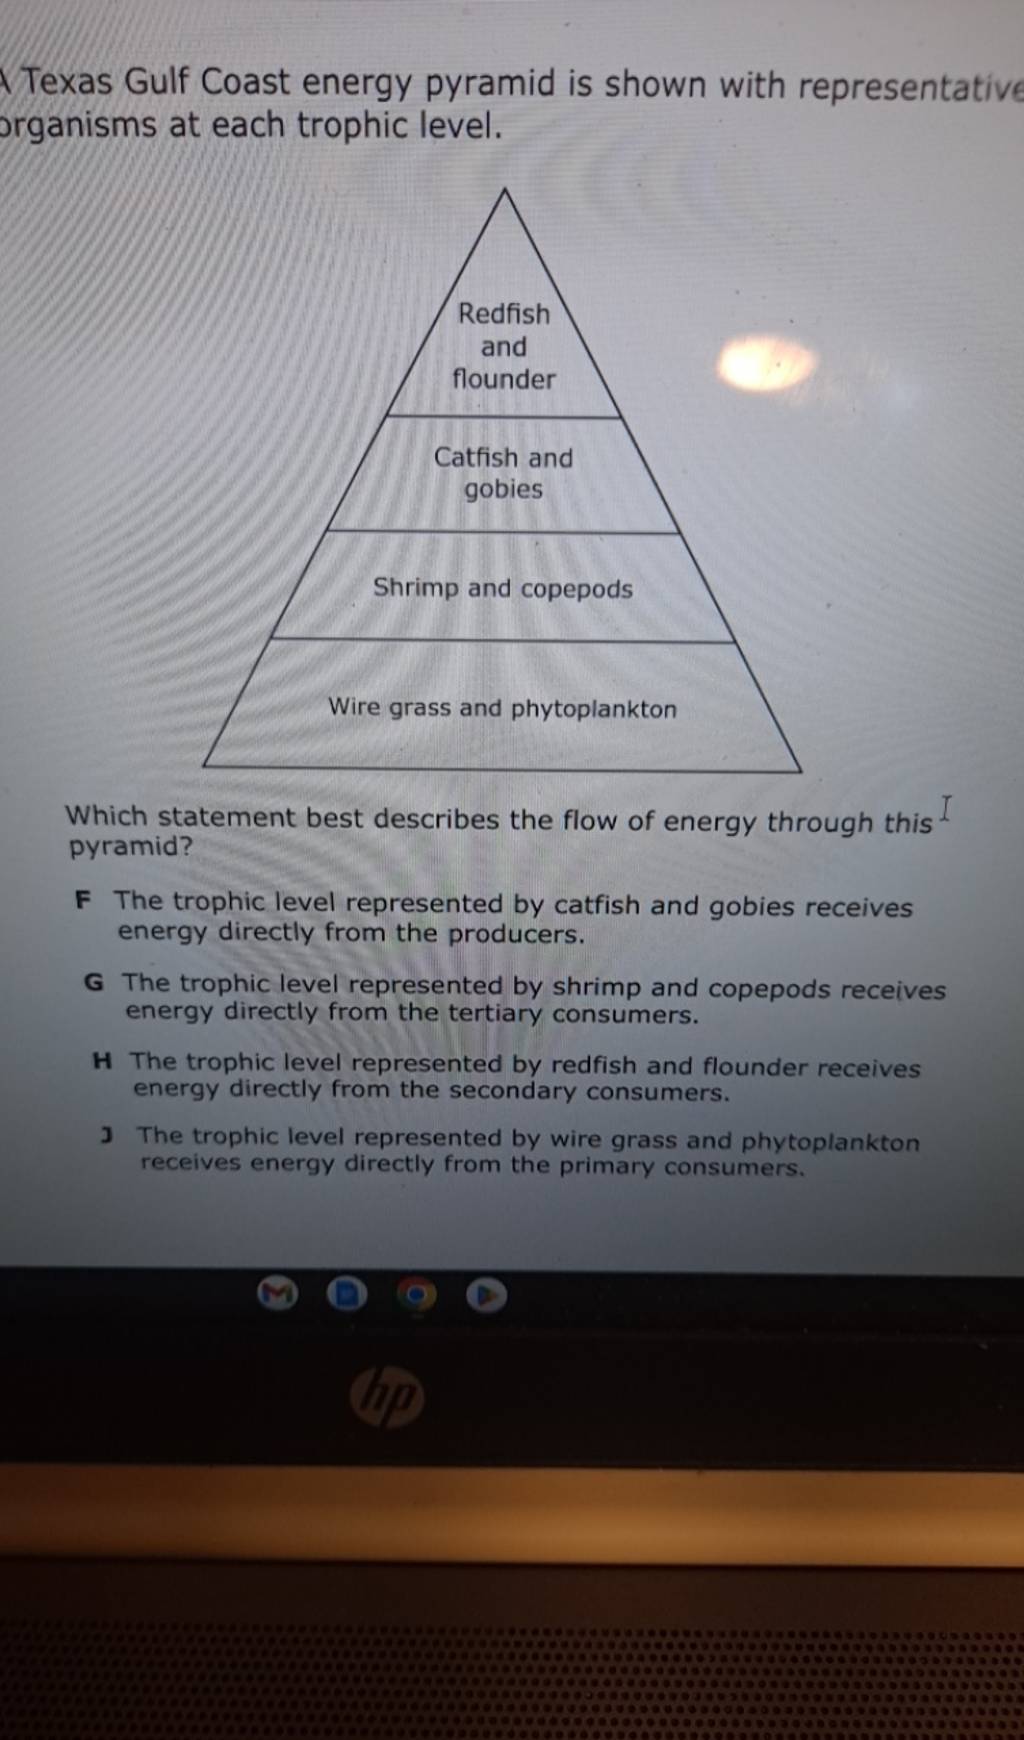 Texas Gulf Coast energy pyramid is shown with representative organisms